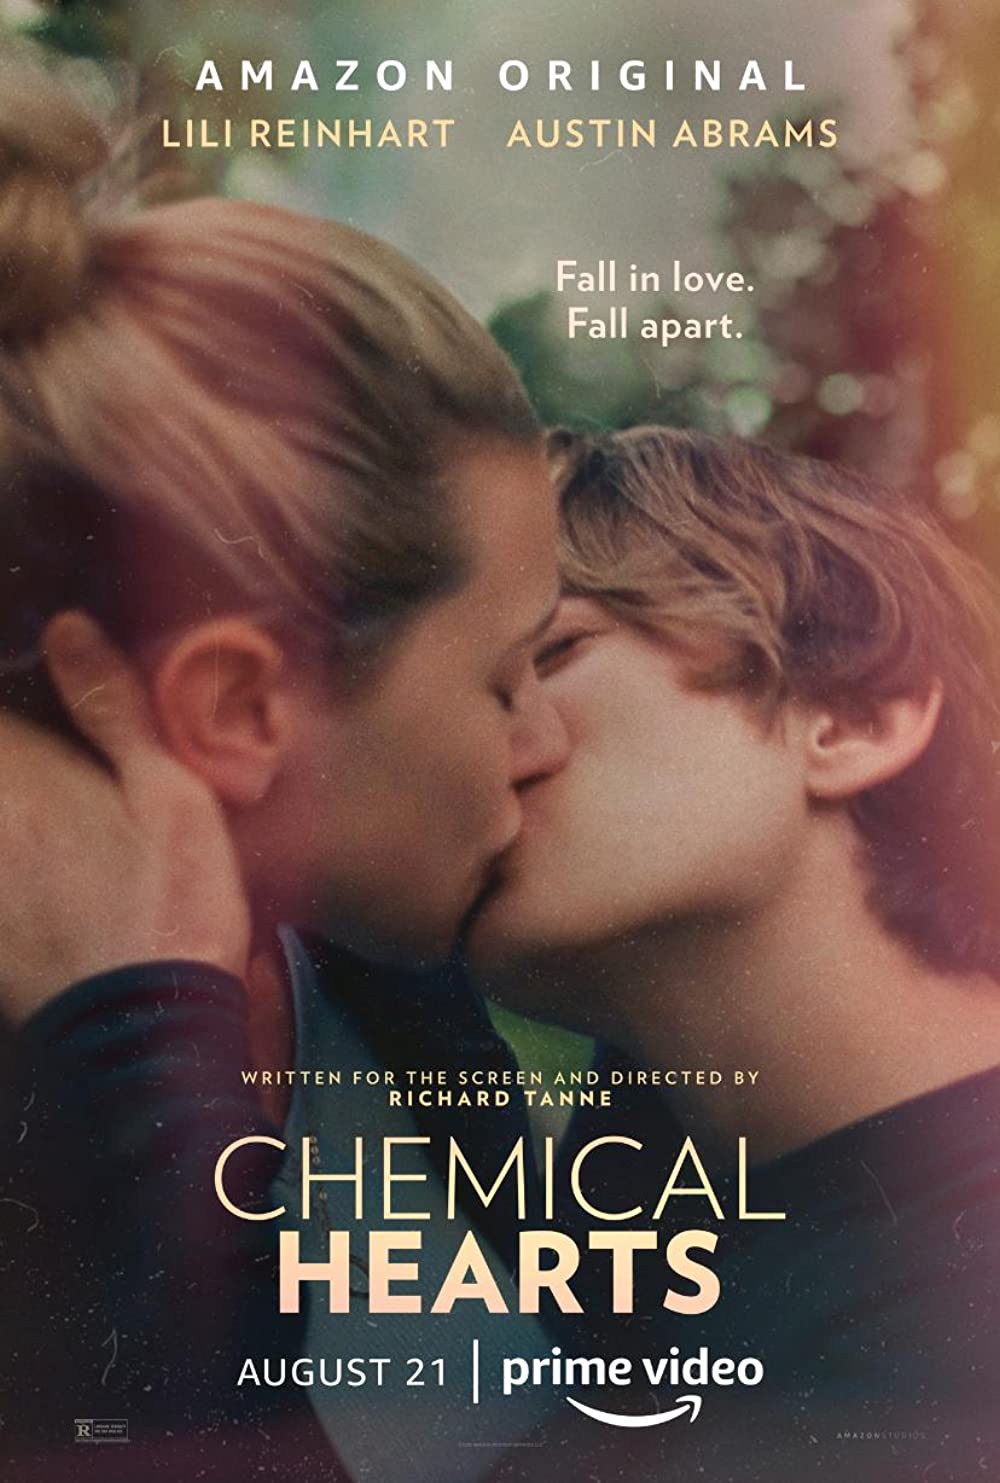 Filmbeschreibung zu Chemical Hearts